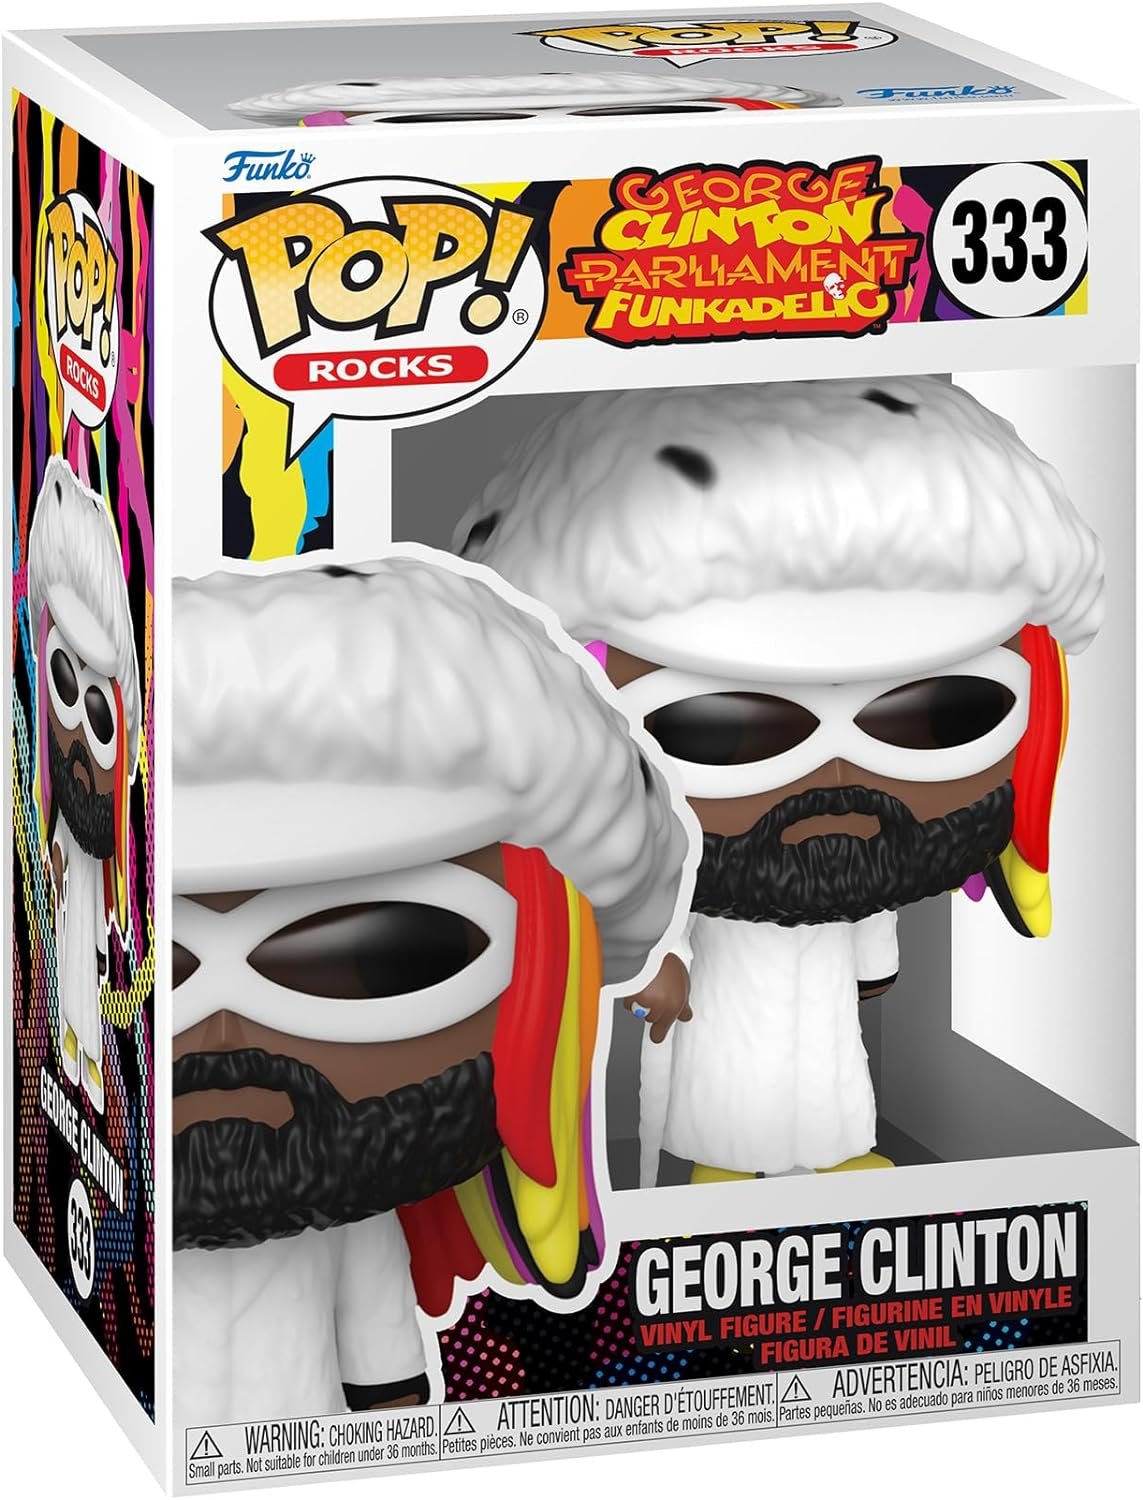 Funko Pop! Rocks: George Clinton Parliament-Funkadelic